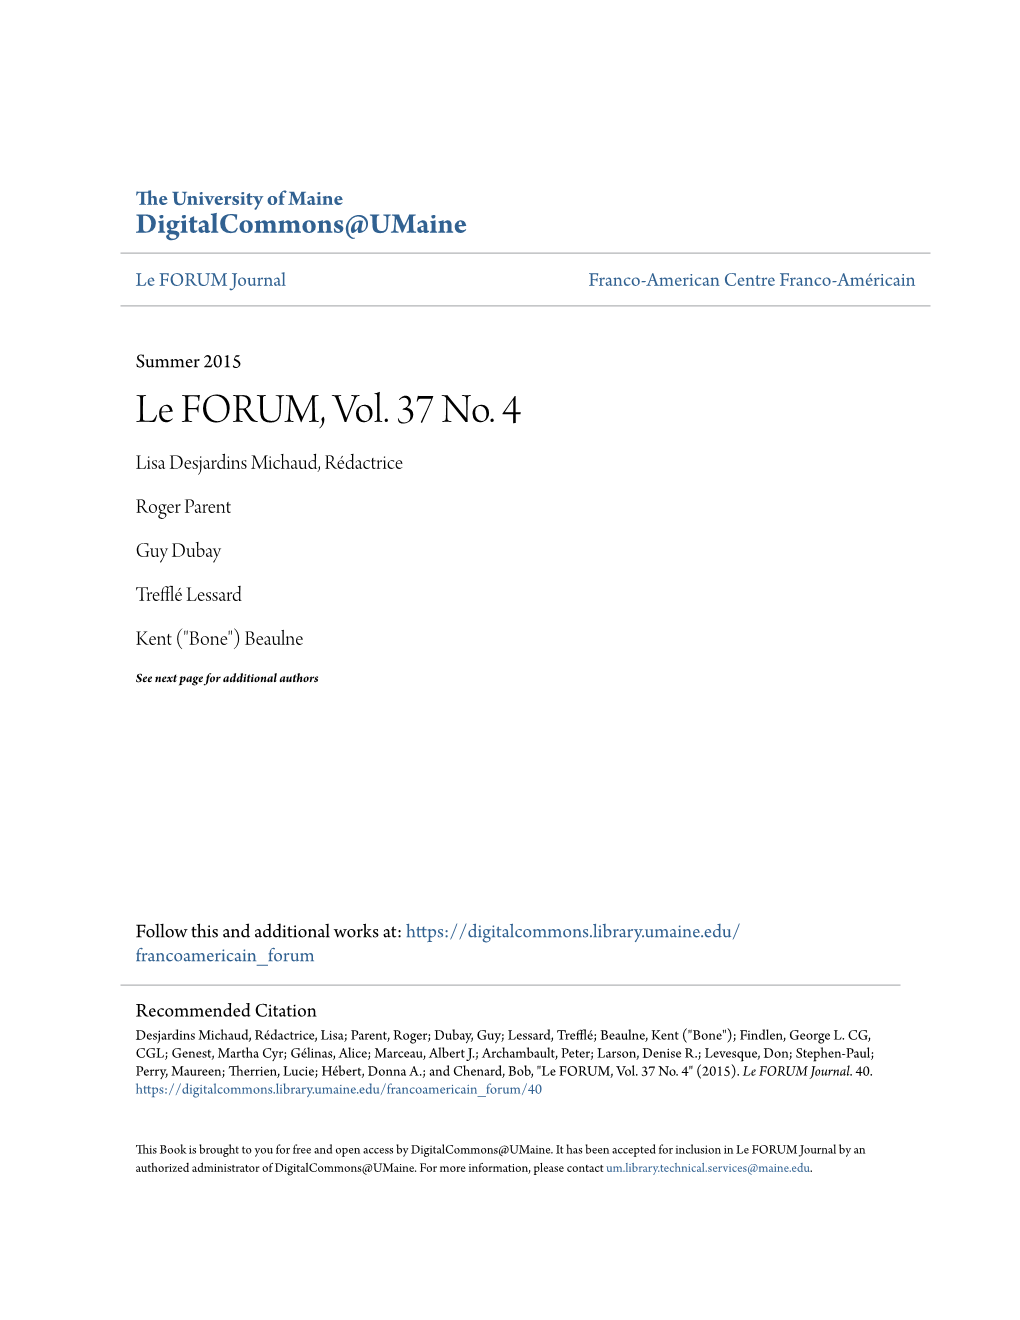 Le FORUM, Vol. 37 No. 4 Lisa Desjardins Michaud, Rédactrice